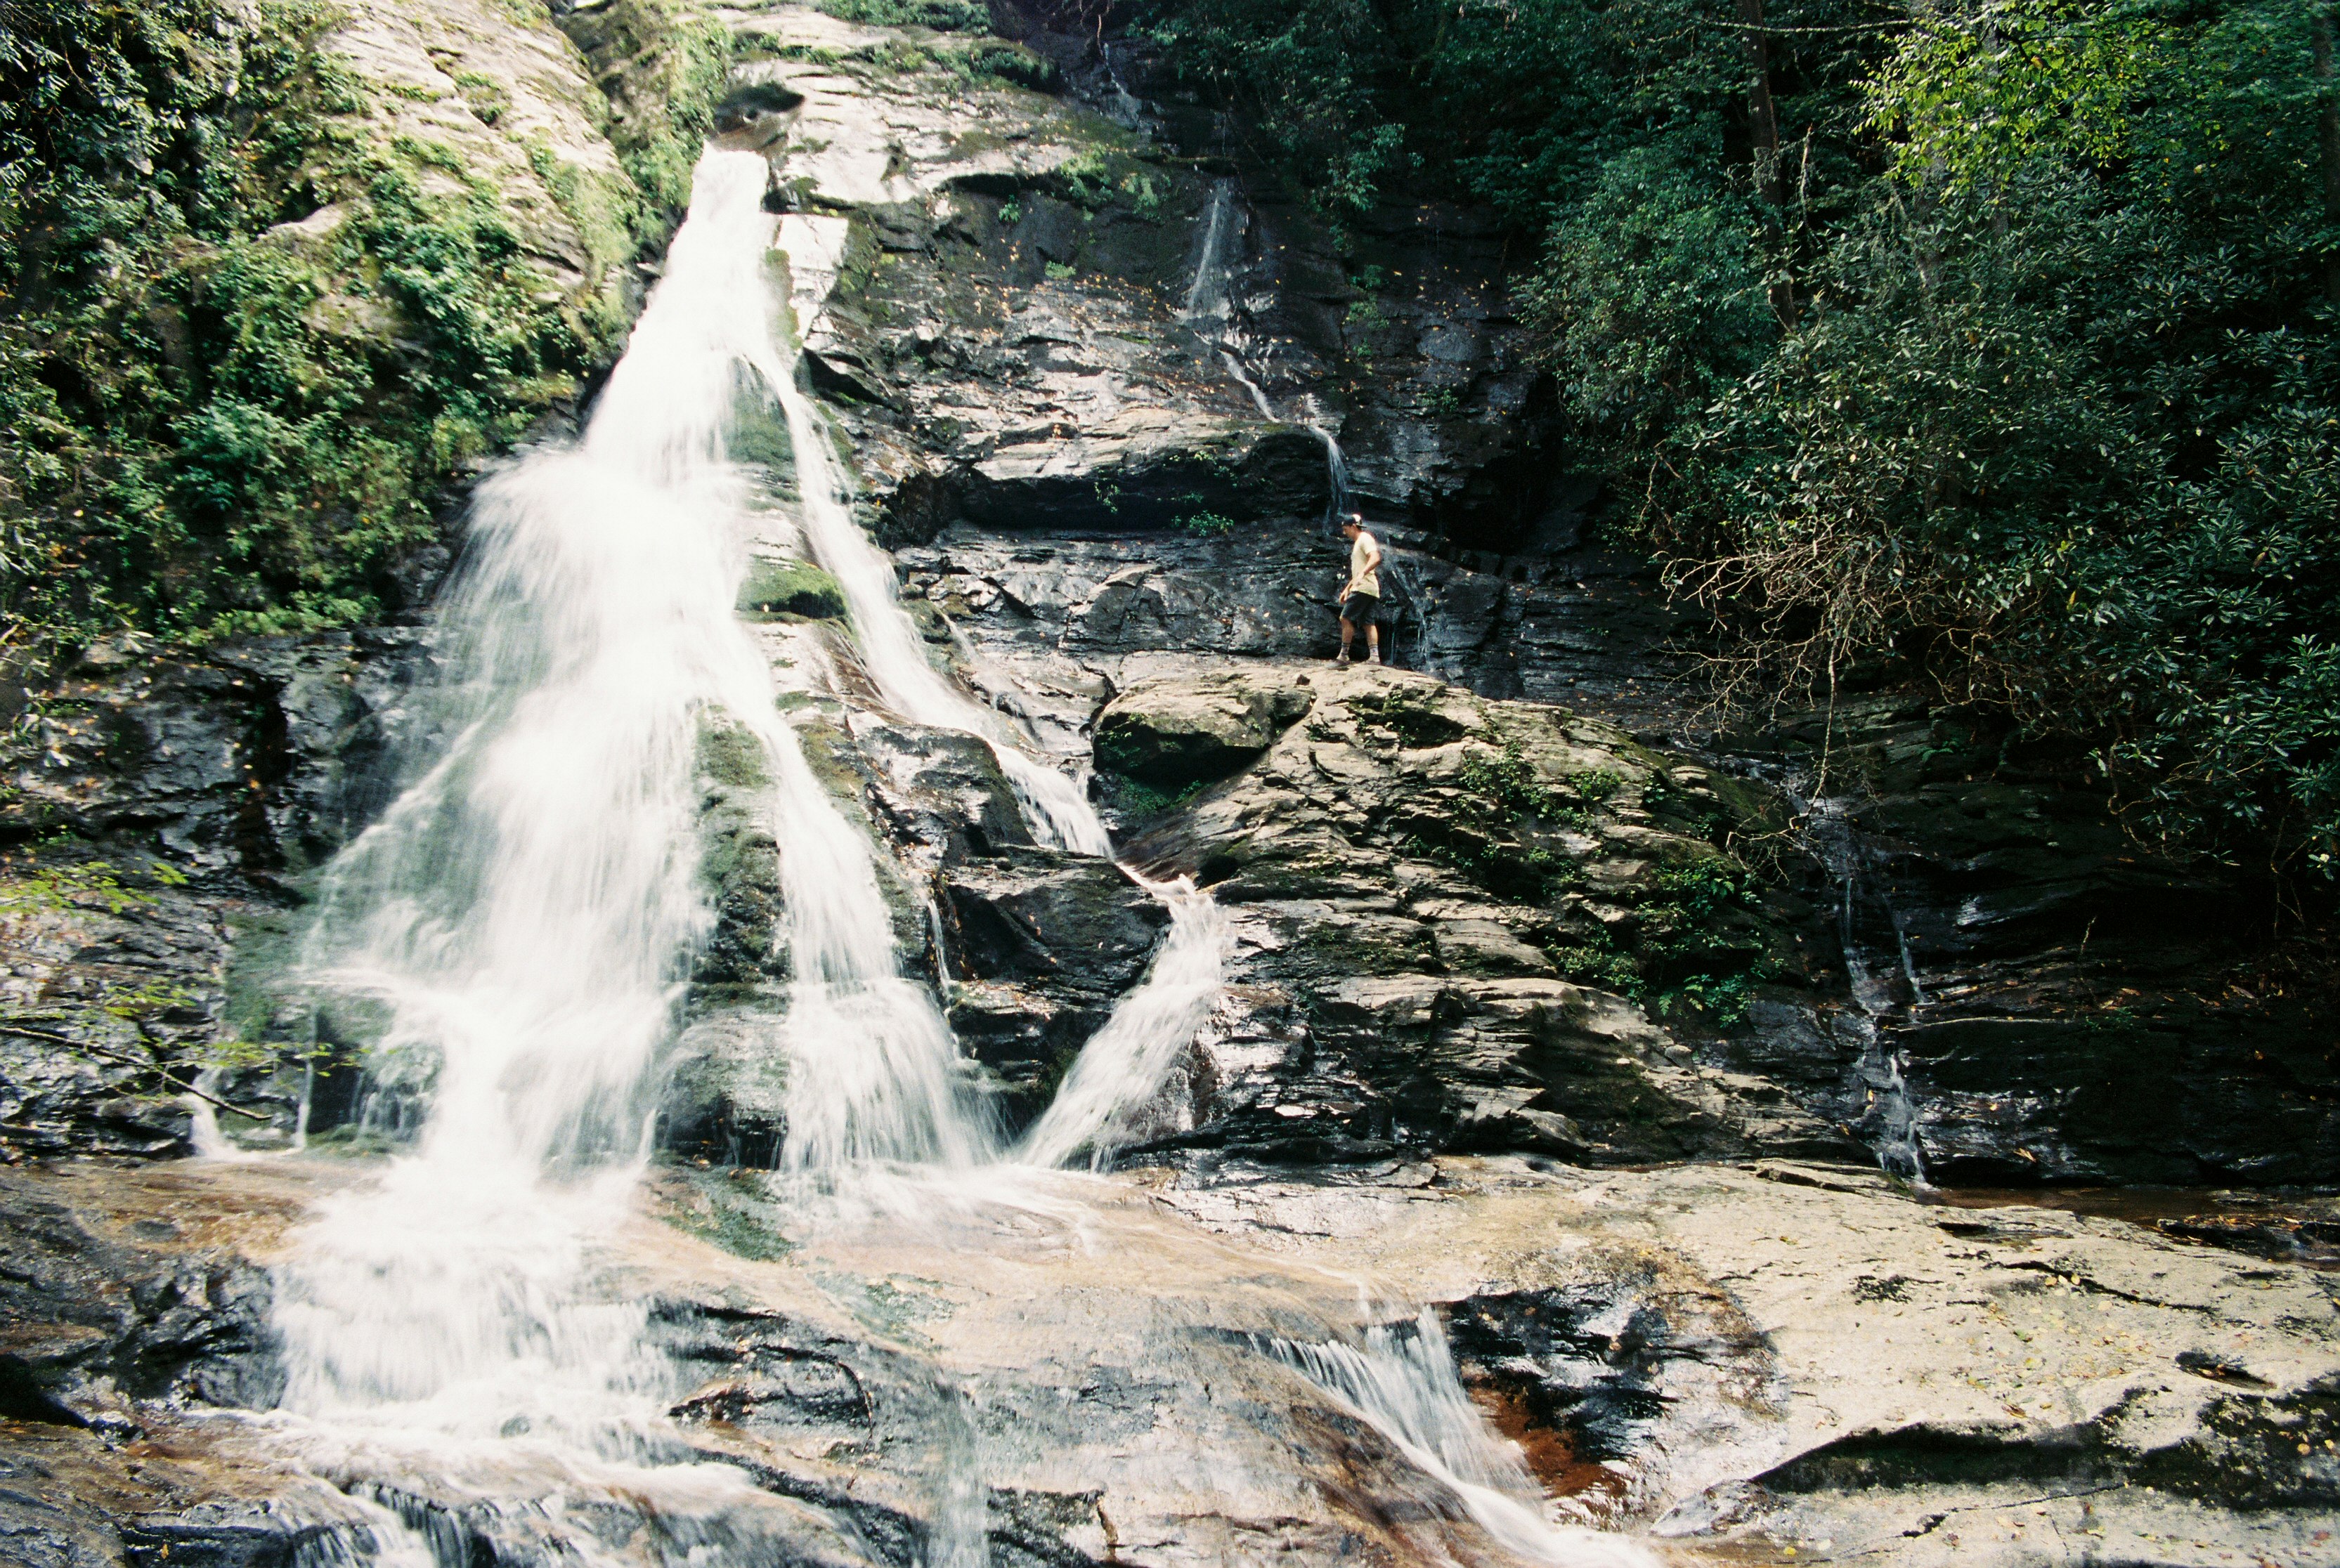 water falls on rocky mountain